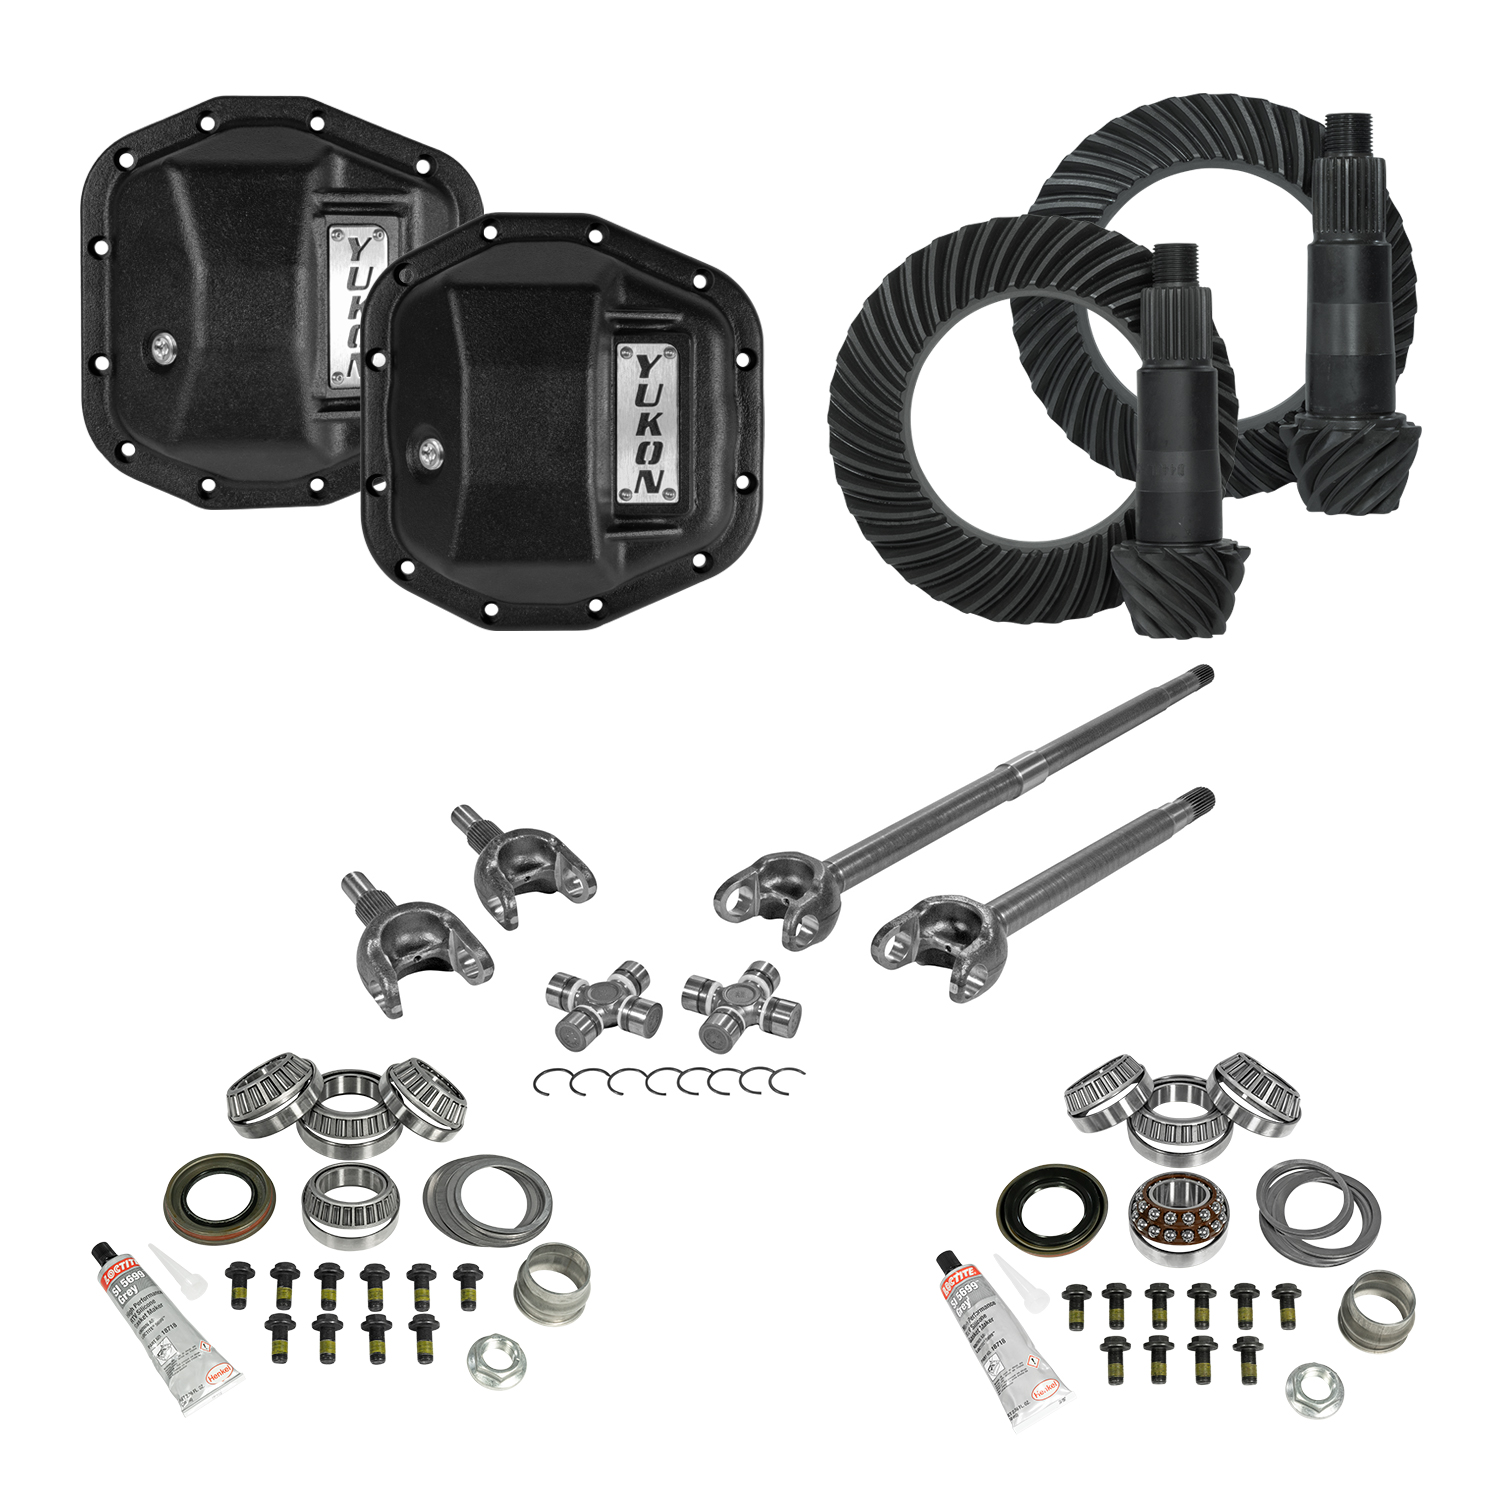 Yukon Stage 3 Jeep JL/JT Re-Gear Kit w/Covers, Front Axles, Dana 44, 5.13 Ratio